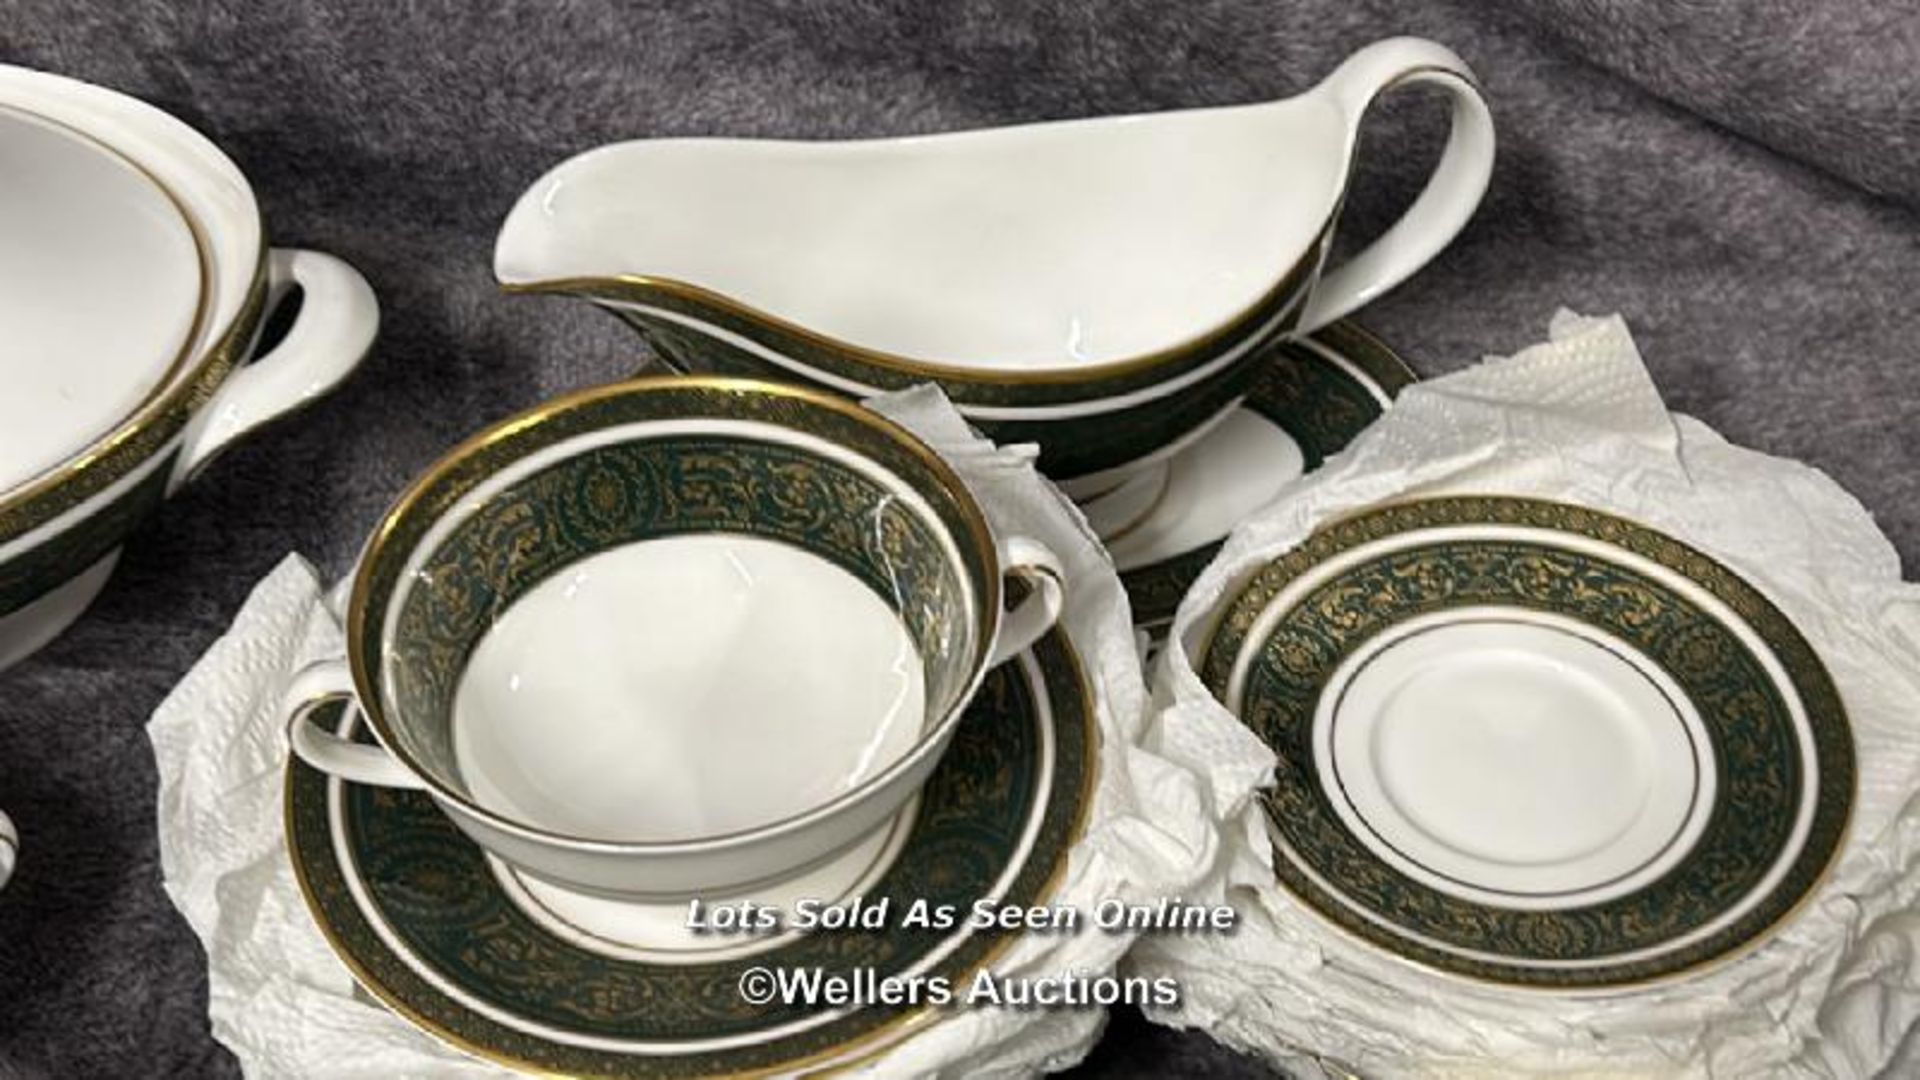 Royal Doulton "Vanborough" dinner service including 10 dinner plates, 15 tea plates, 10 side plates, - Image 5 of 8